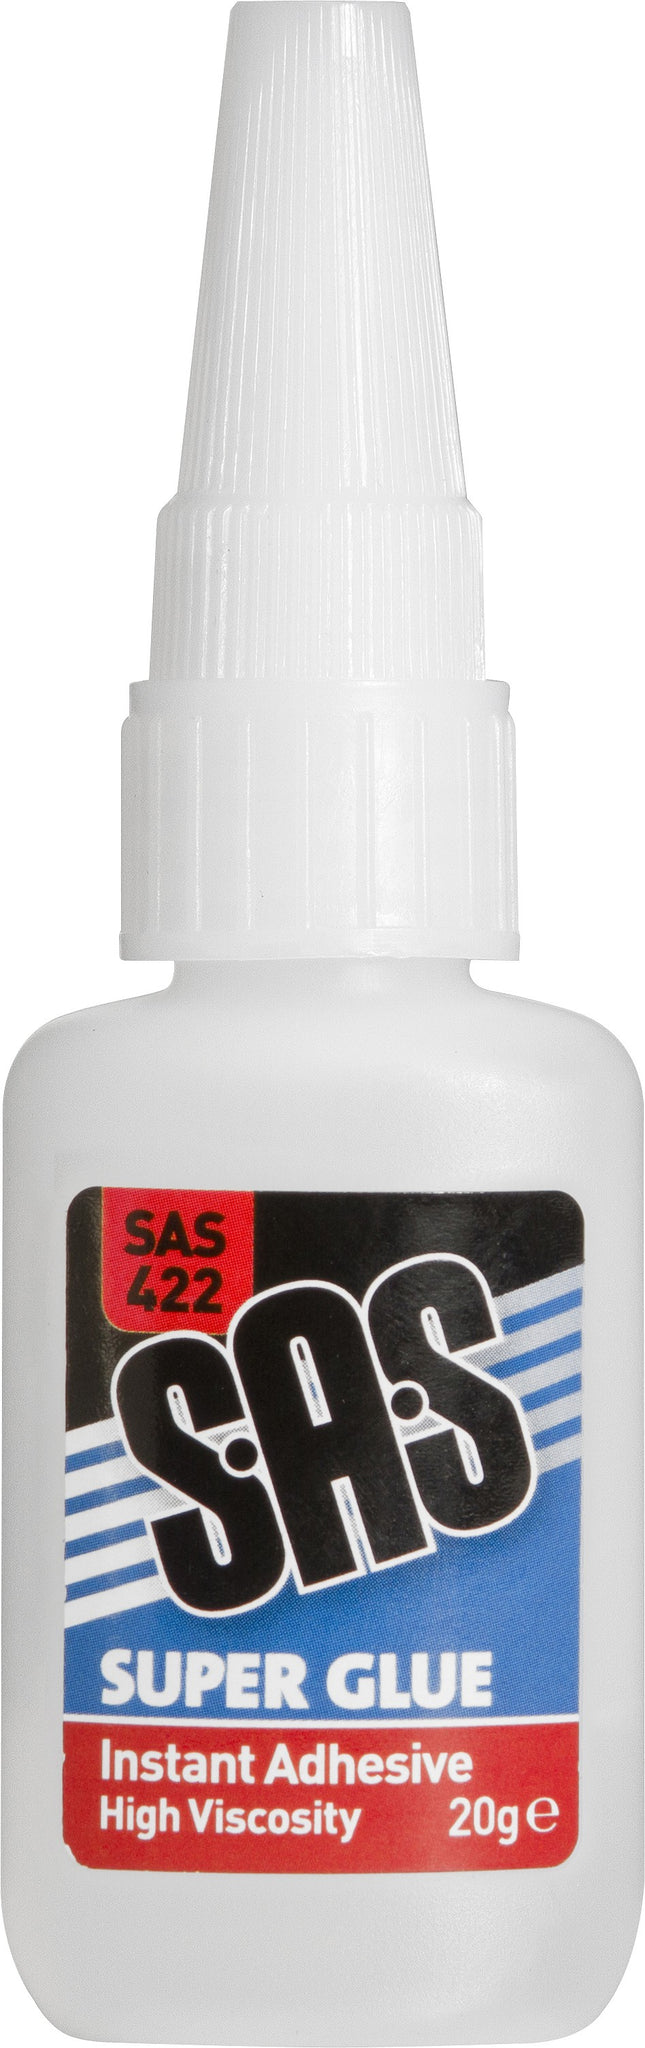 SAS422 High Viscosity Super Glue 20g Bottle